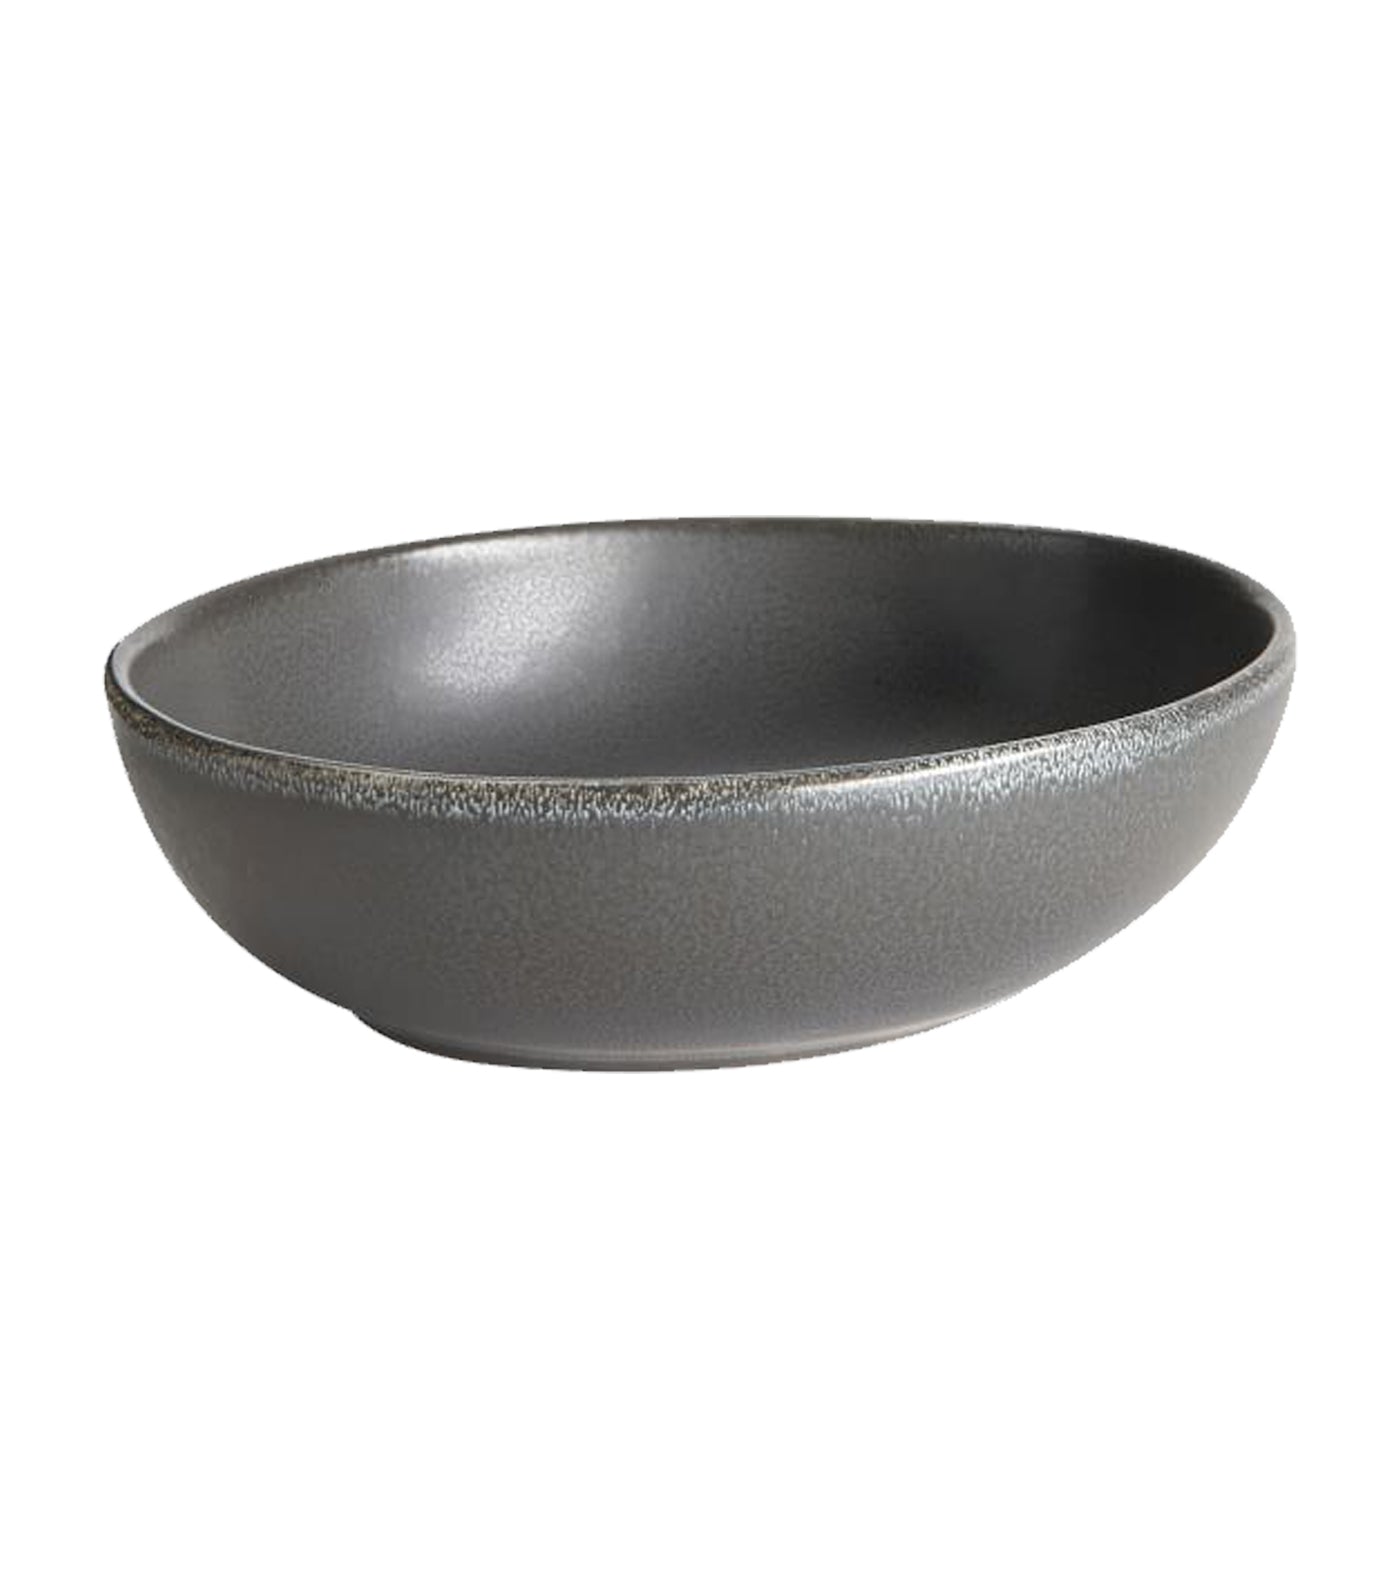 Pottery Barn Mason Dinnerware Collection - Charcoal